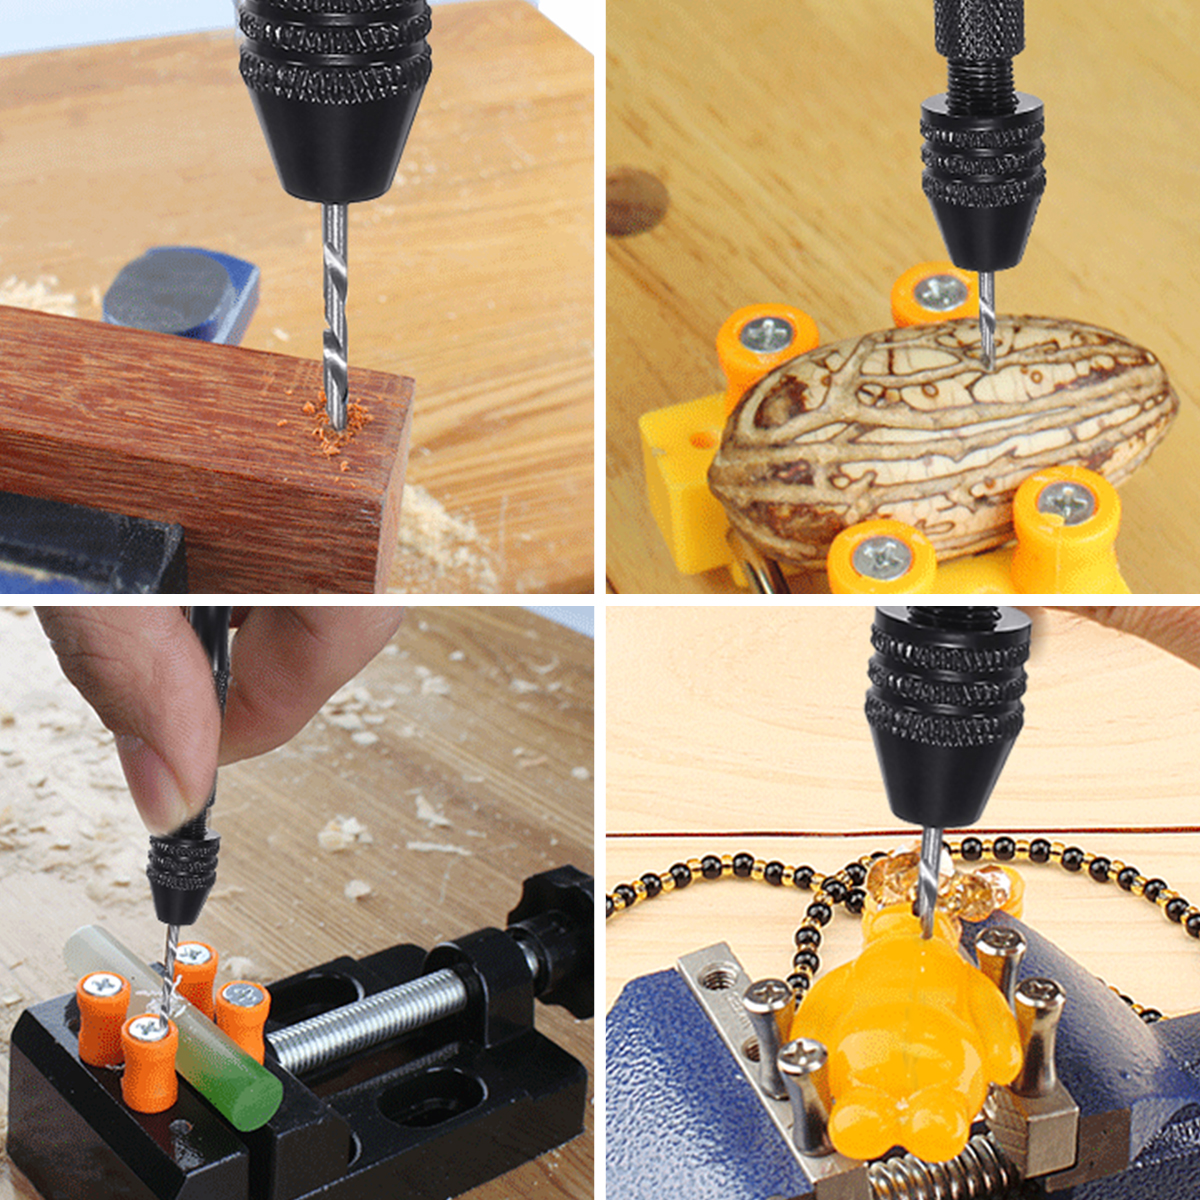 26-Pcs-Precision-Pin-Vise-Micro-Mini-Hand-Twist-Drill-Bits-Set-for-Metal-Wood-Jewelry-Delicate-DIY-1403097-5